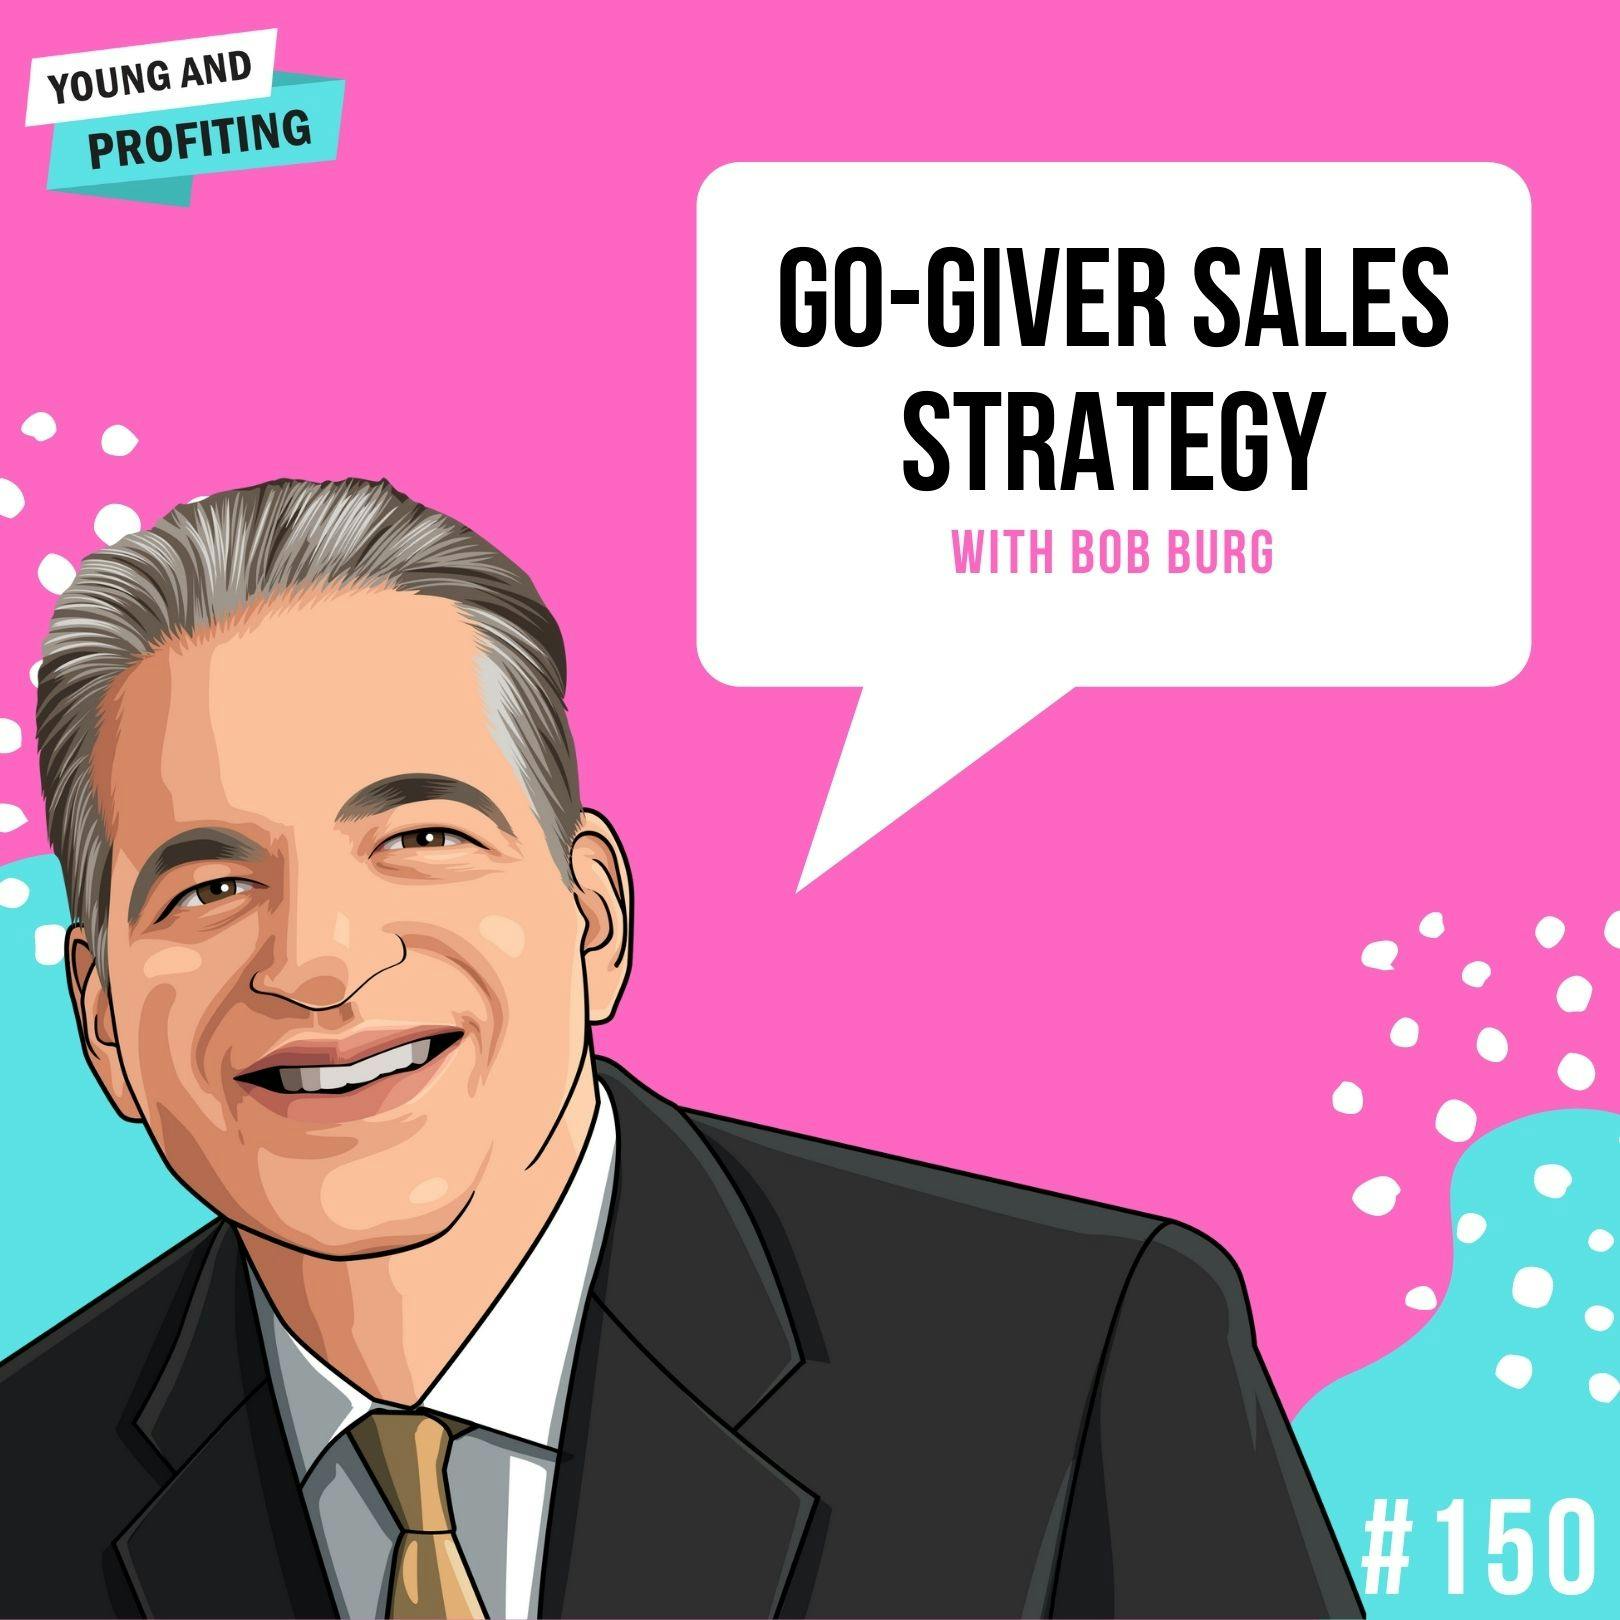 Bob Burg: Go-Giver Sales Strategy | E150 by Hala Taha | YAP Media Network